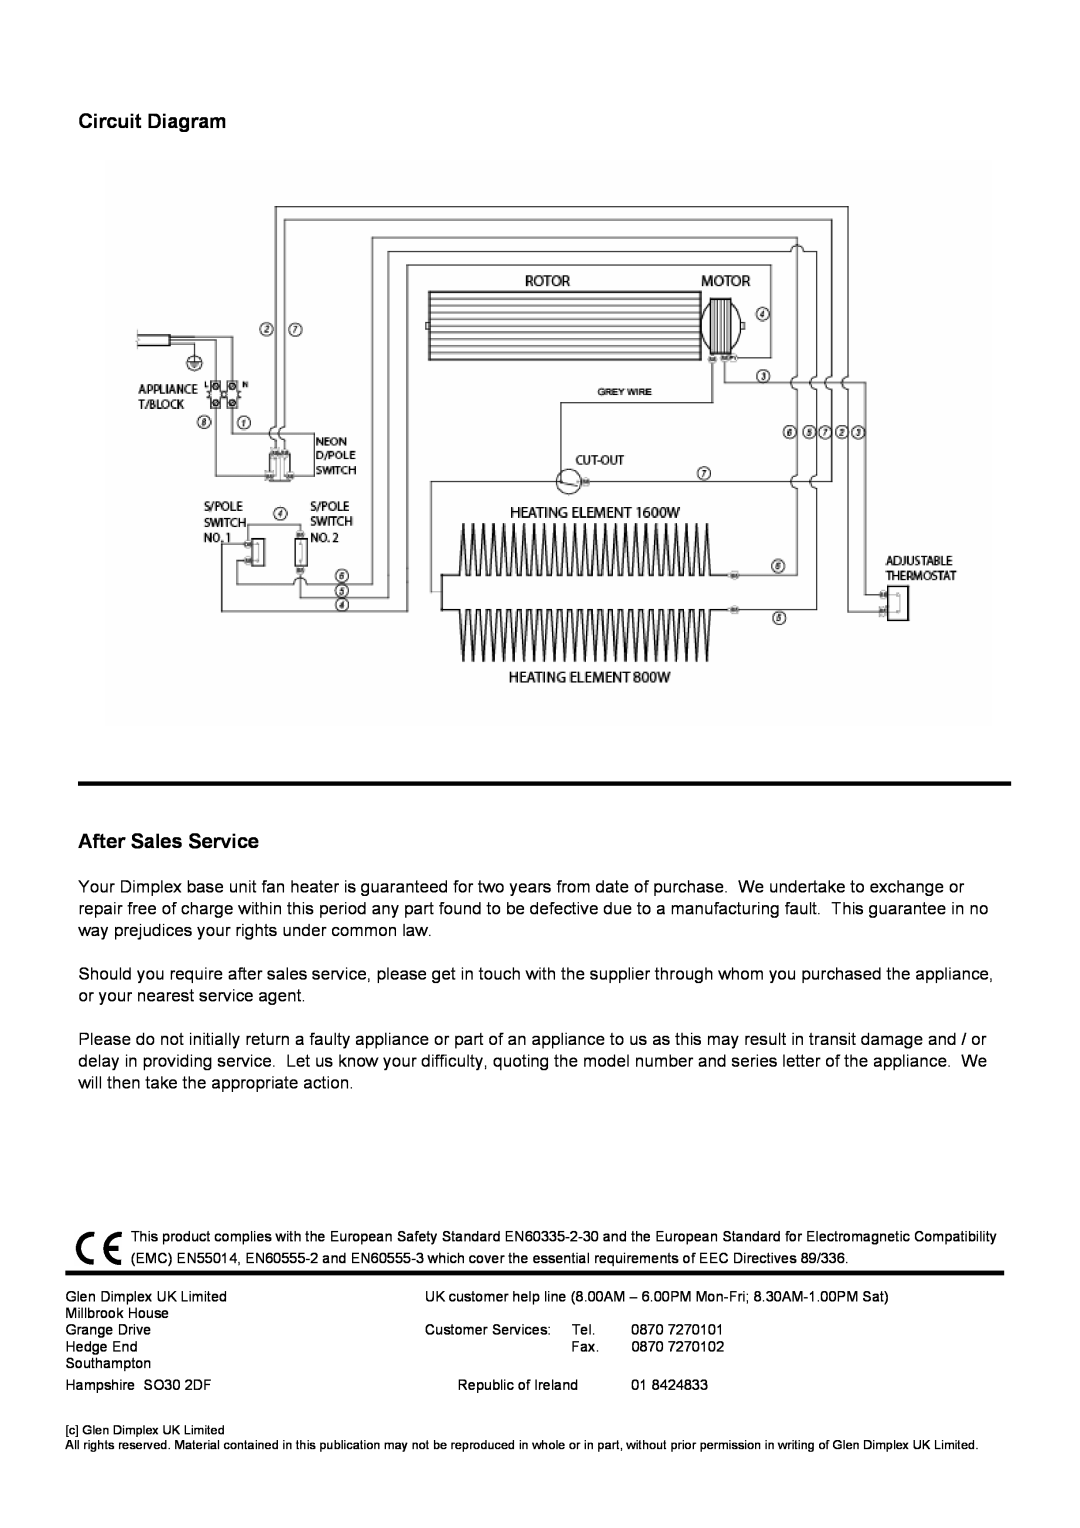 Dimplex BFH24TB, BFH24TS, BFH24T dimensions Circuit Diagram After Sales Service 